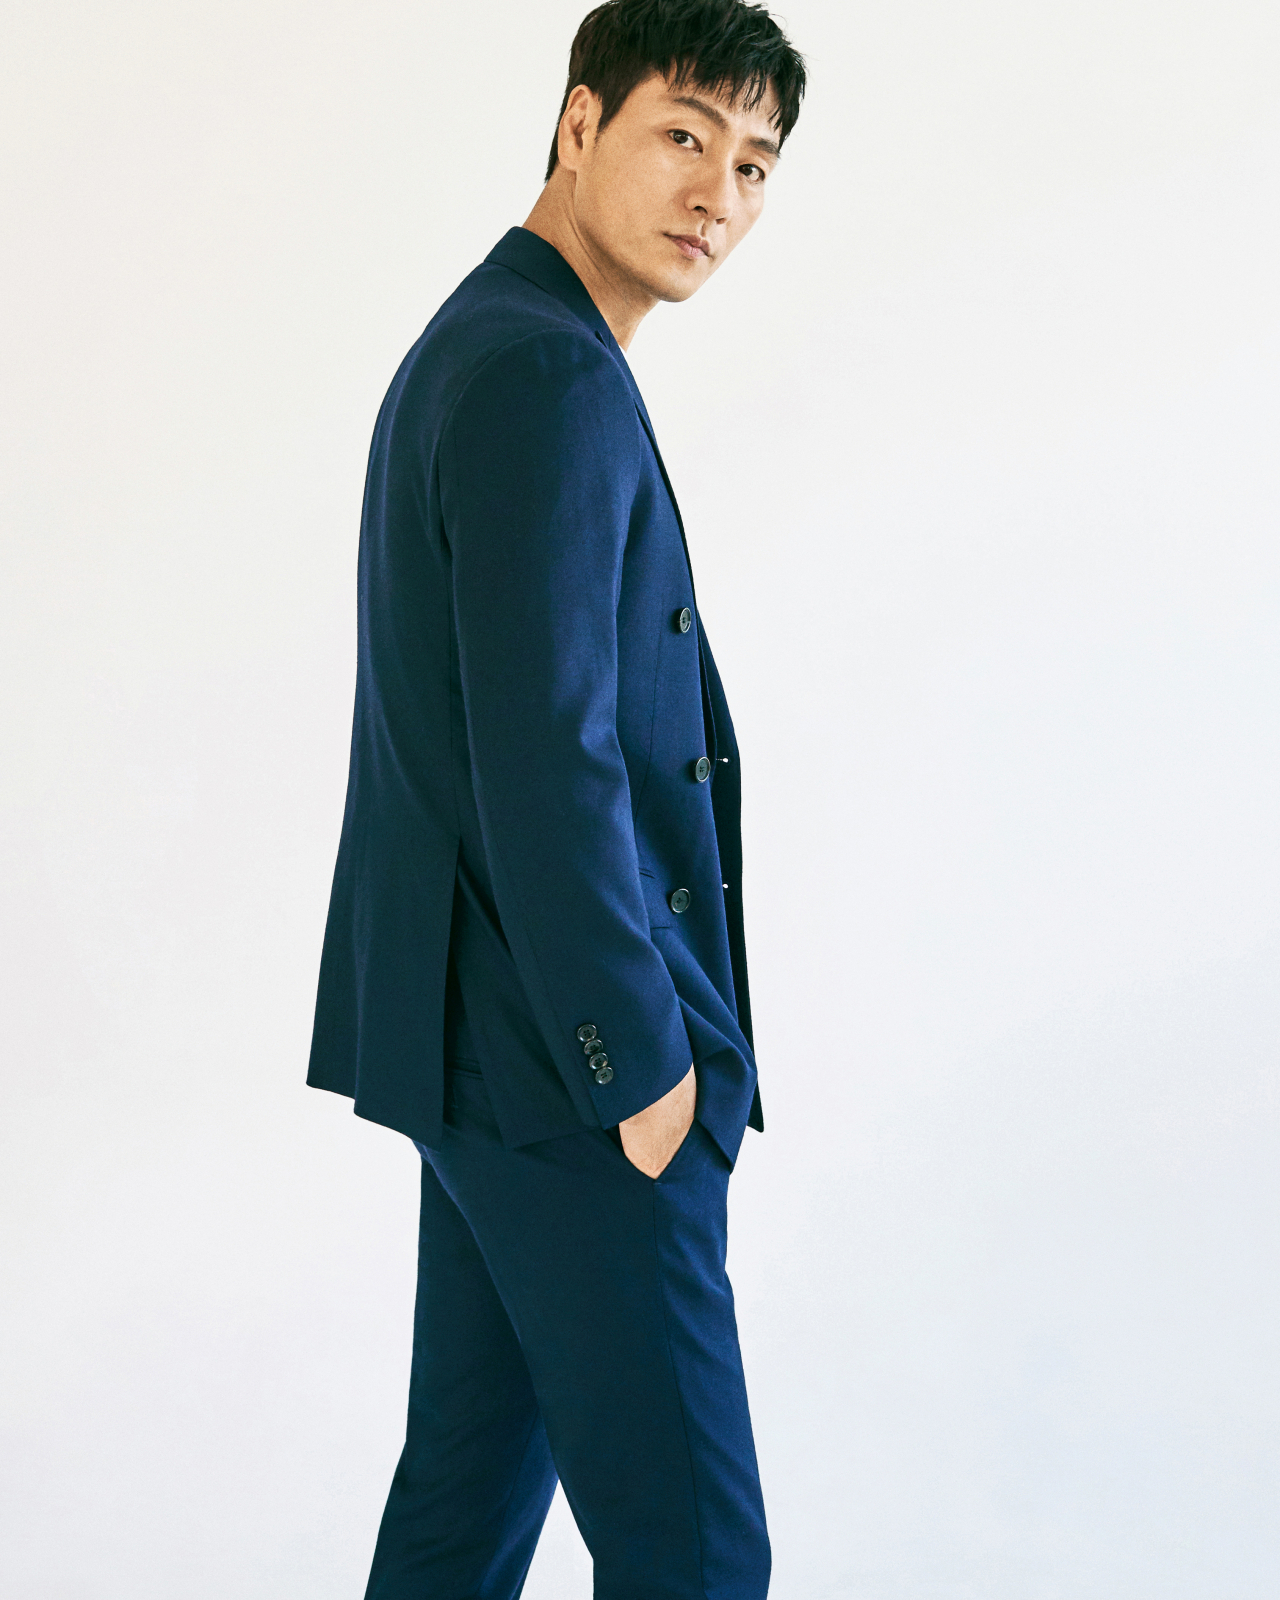 Actor Park Hae-soo (BH Entertainment)